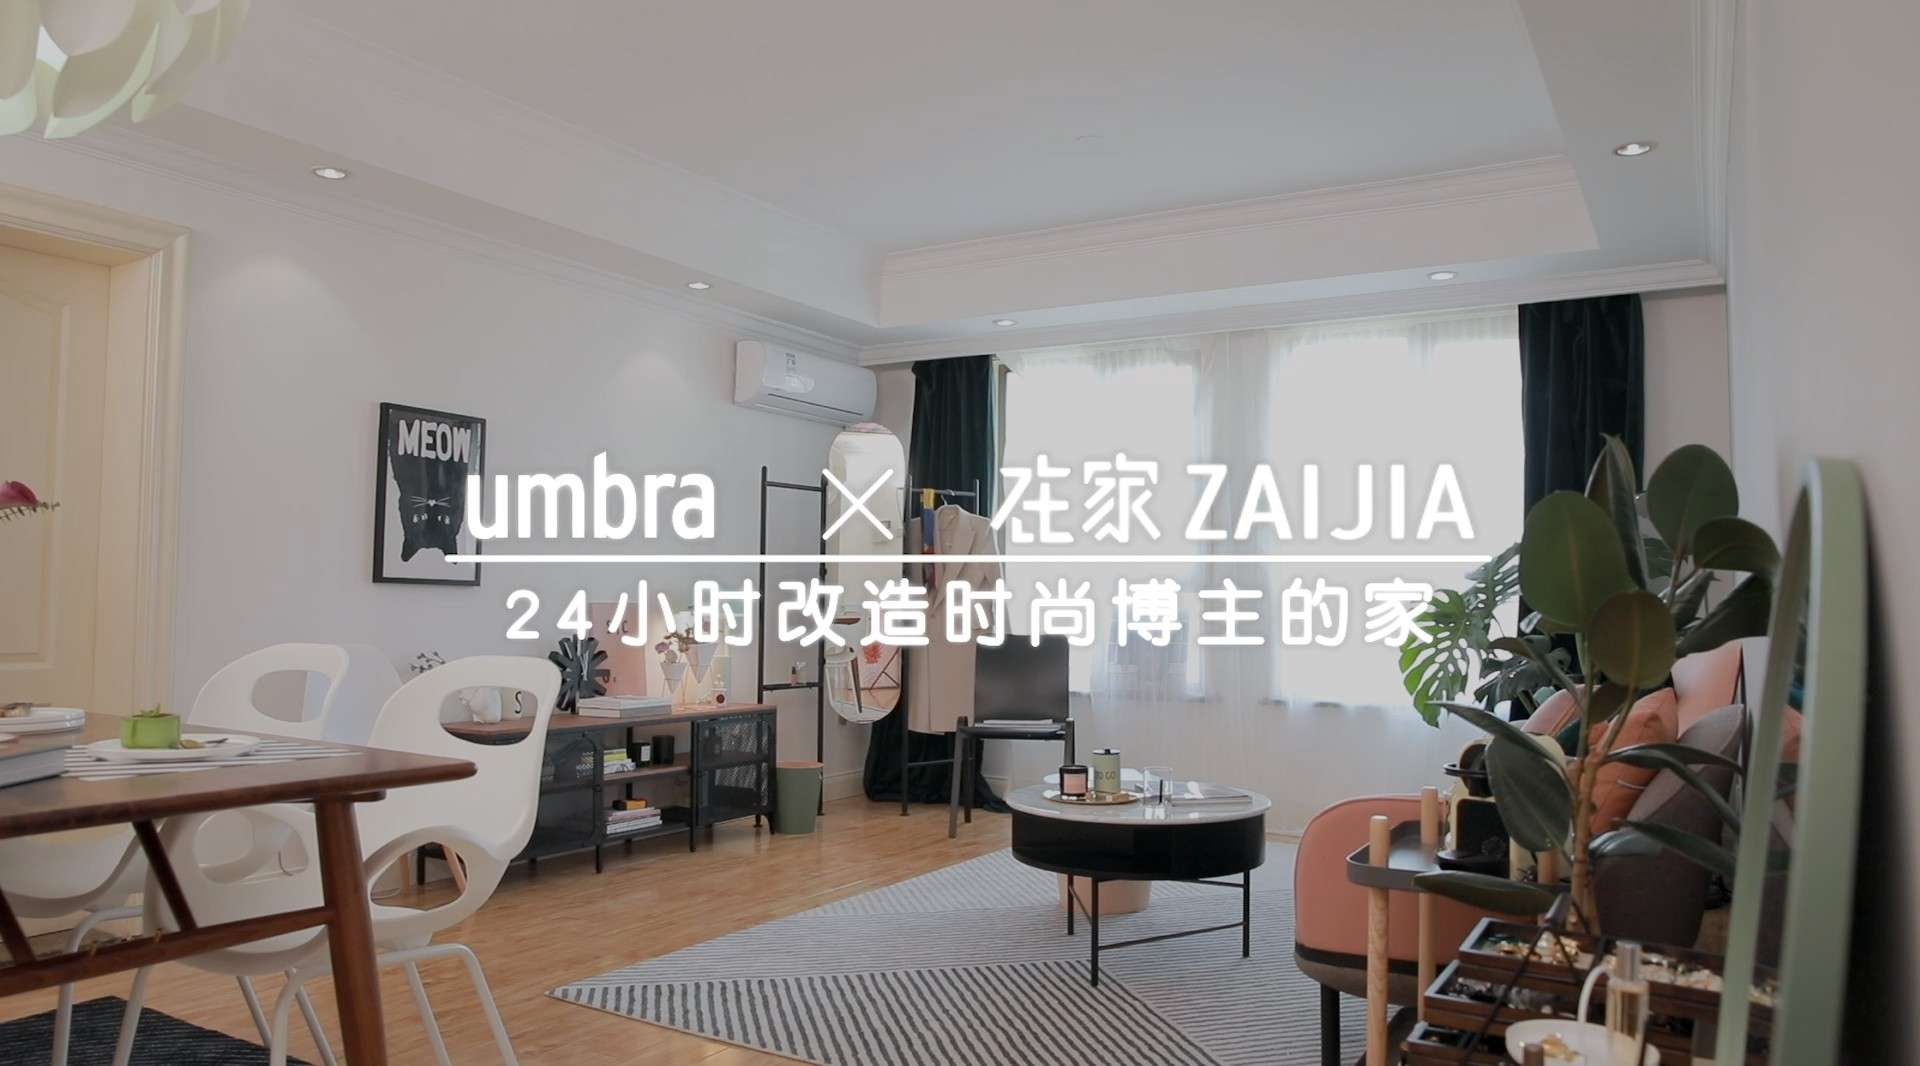 umbra X 在家 时尚博主24家居改造